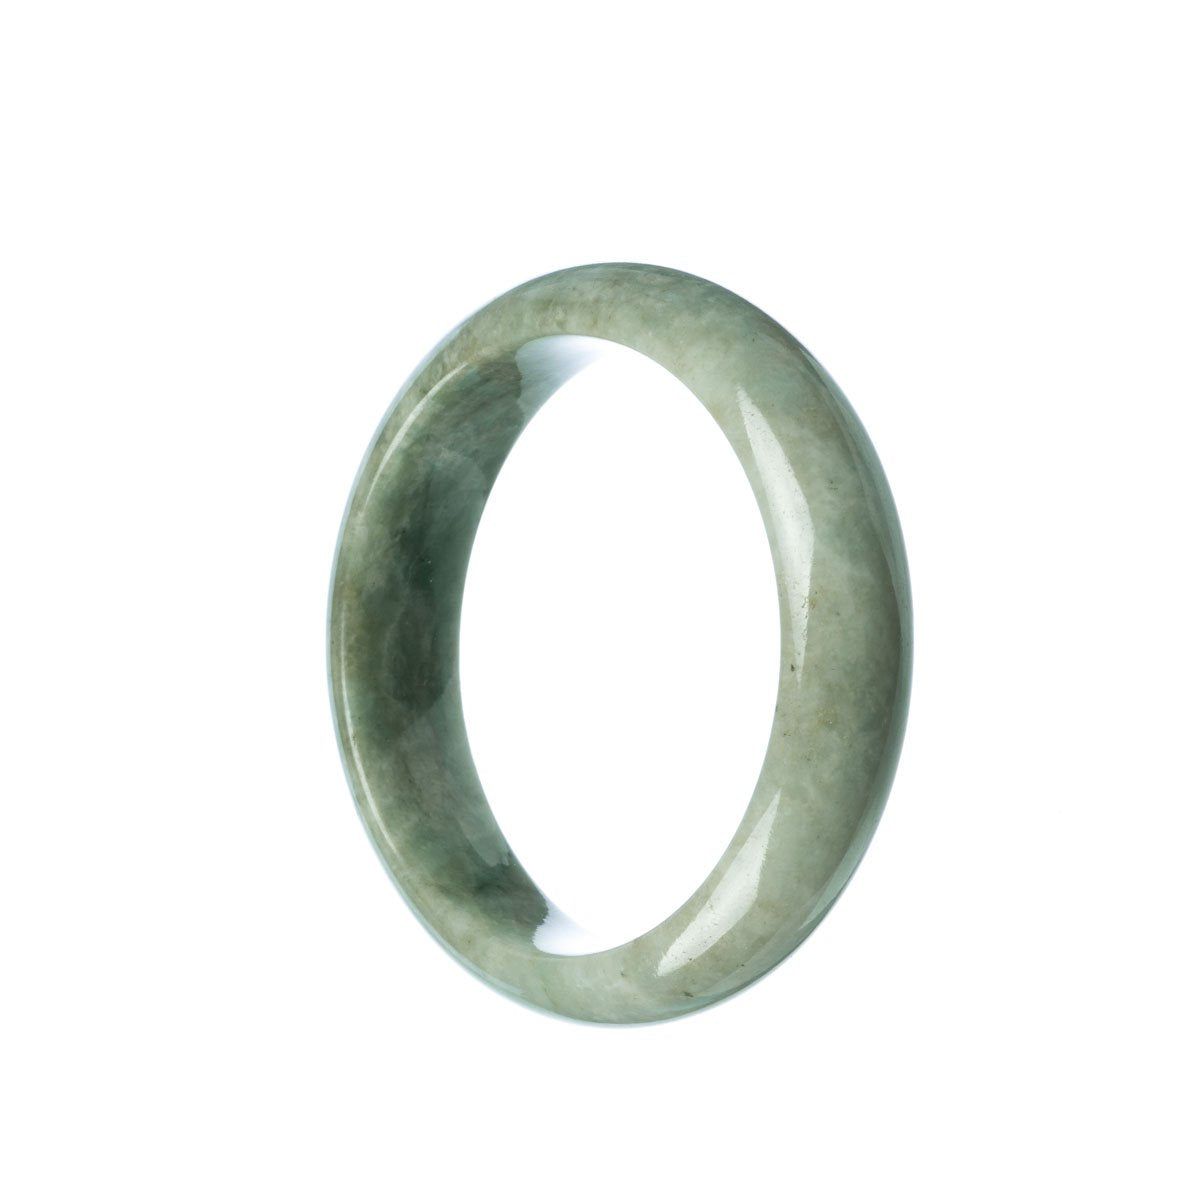 A half-moon shaped jade bracelet made from genuine natural green Burmese jade, sold by MAYS GEMS.